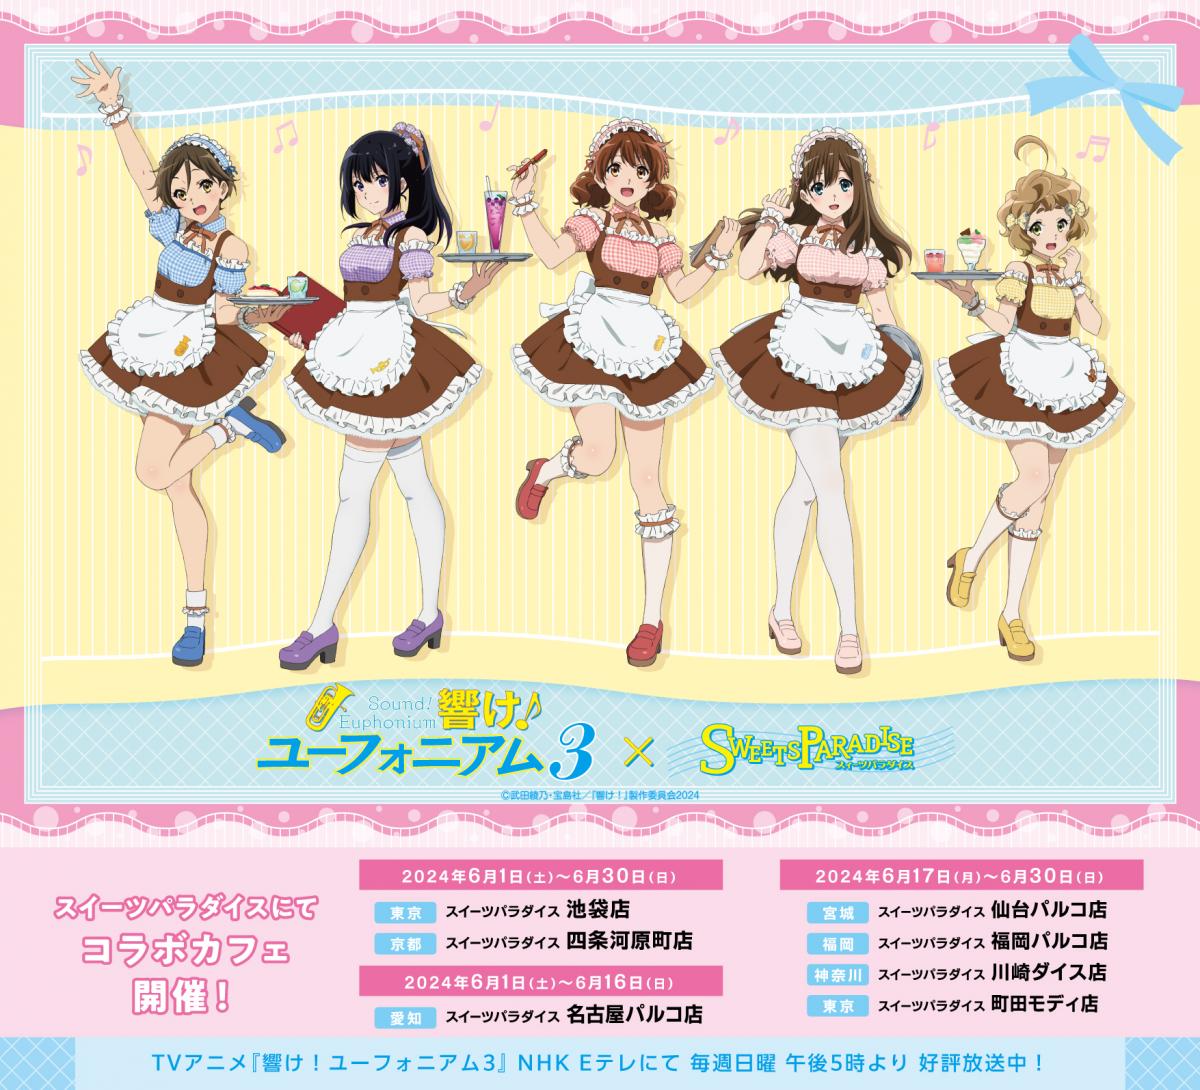 TV anime "Sound! Euphonium 3" x SWEETS PARADISE collaboration cafe (Nagoya Parco store)